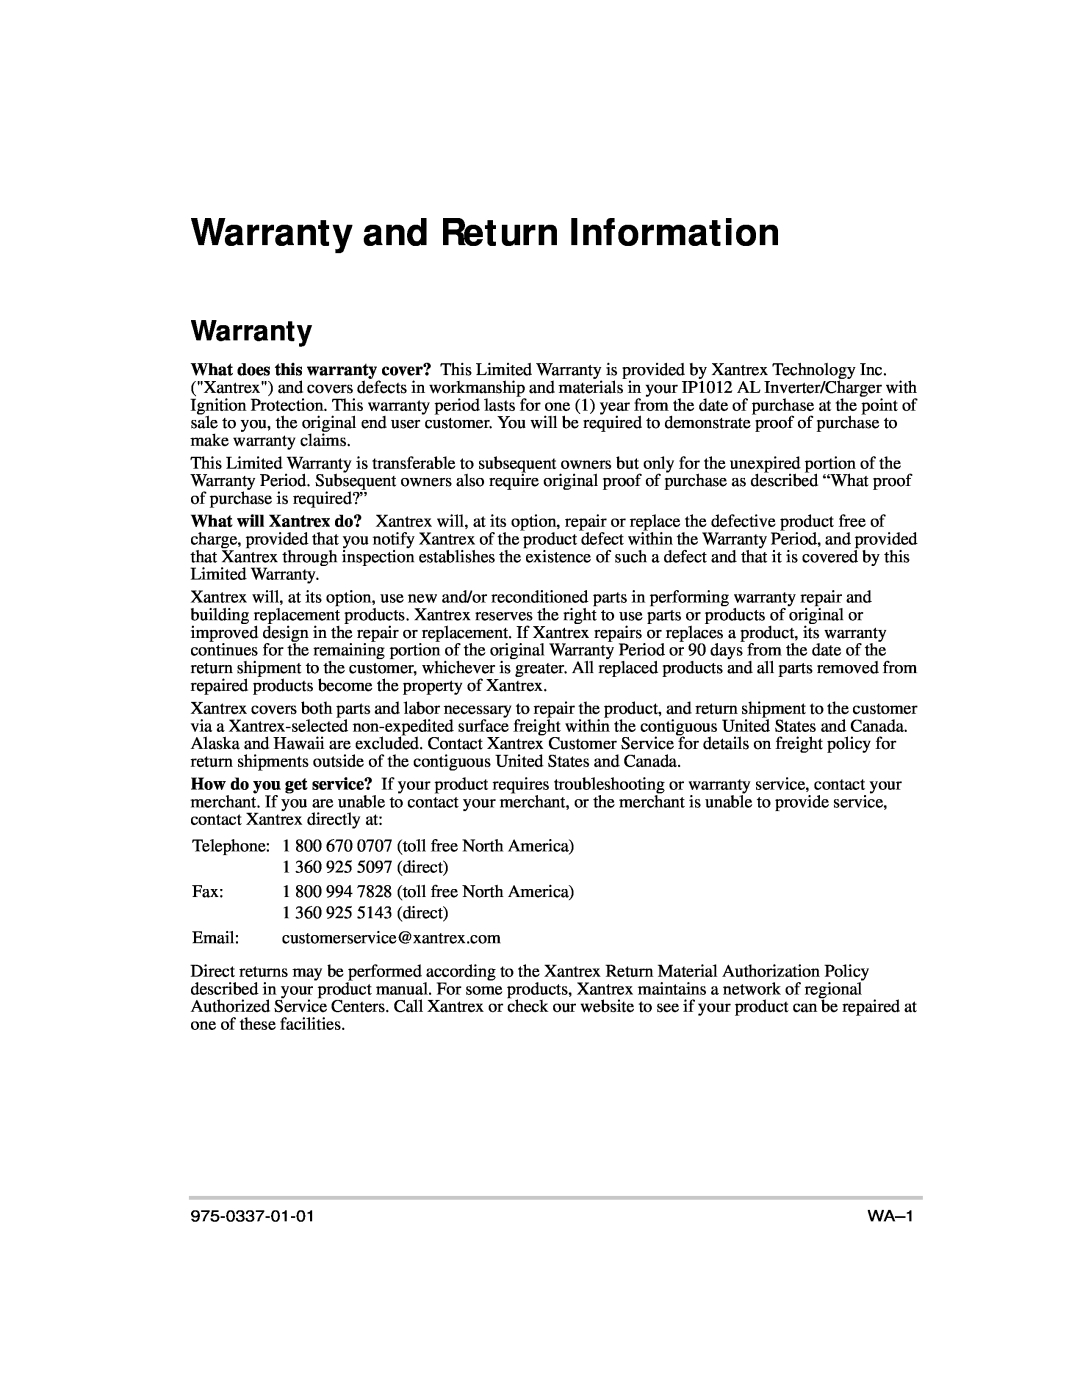 Xantrex Technology IP1012 AL manual Warranty and Return Information 